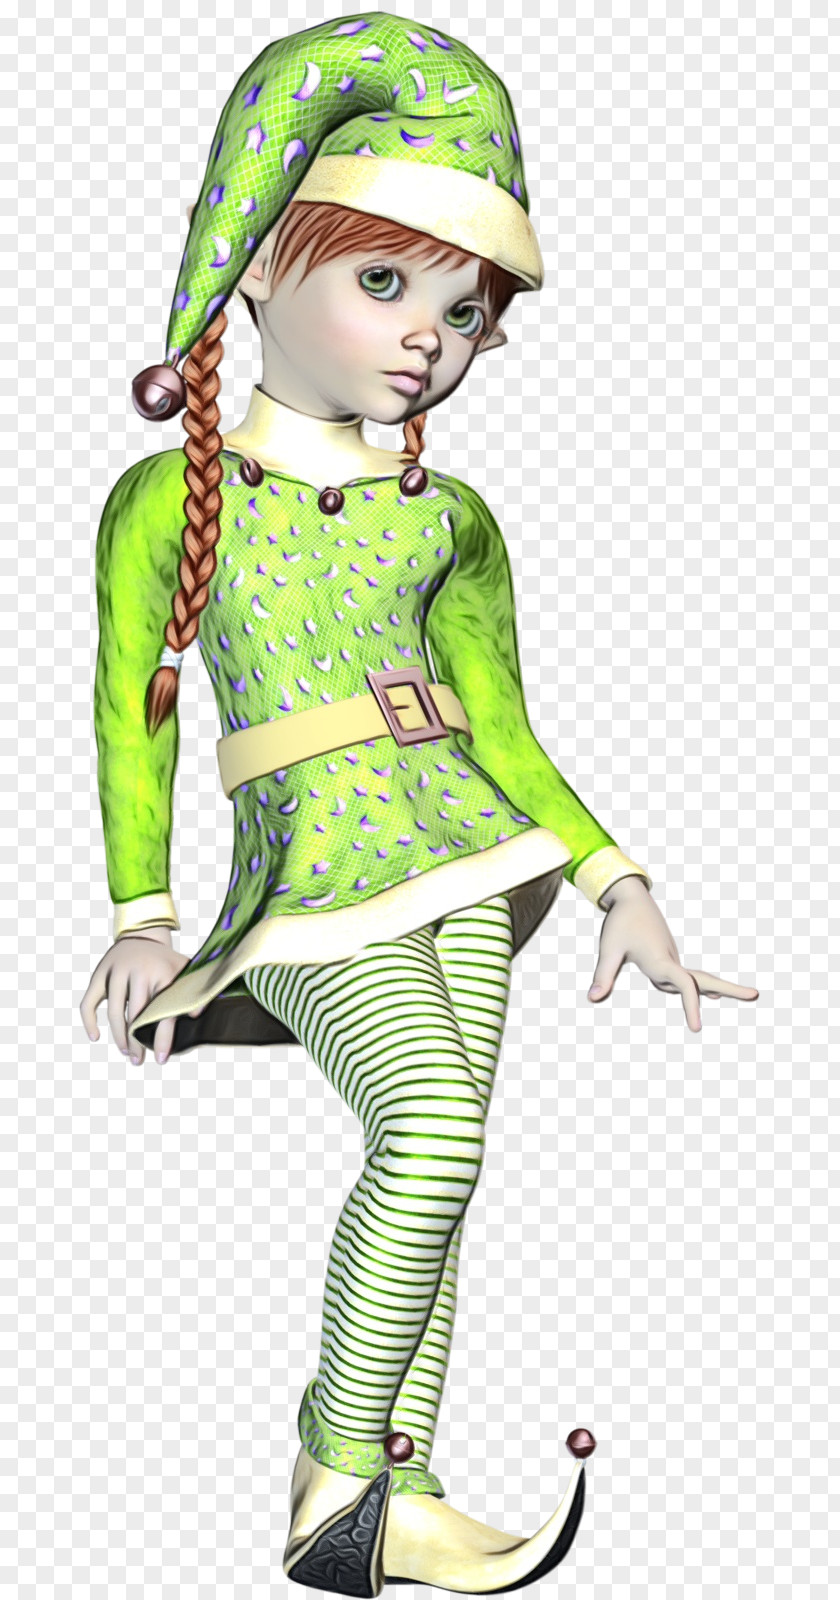 Green Clothing Cartoon Costume Design Fashion PNG